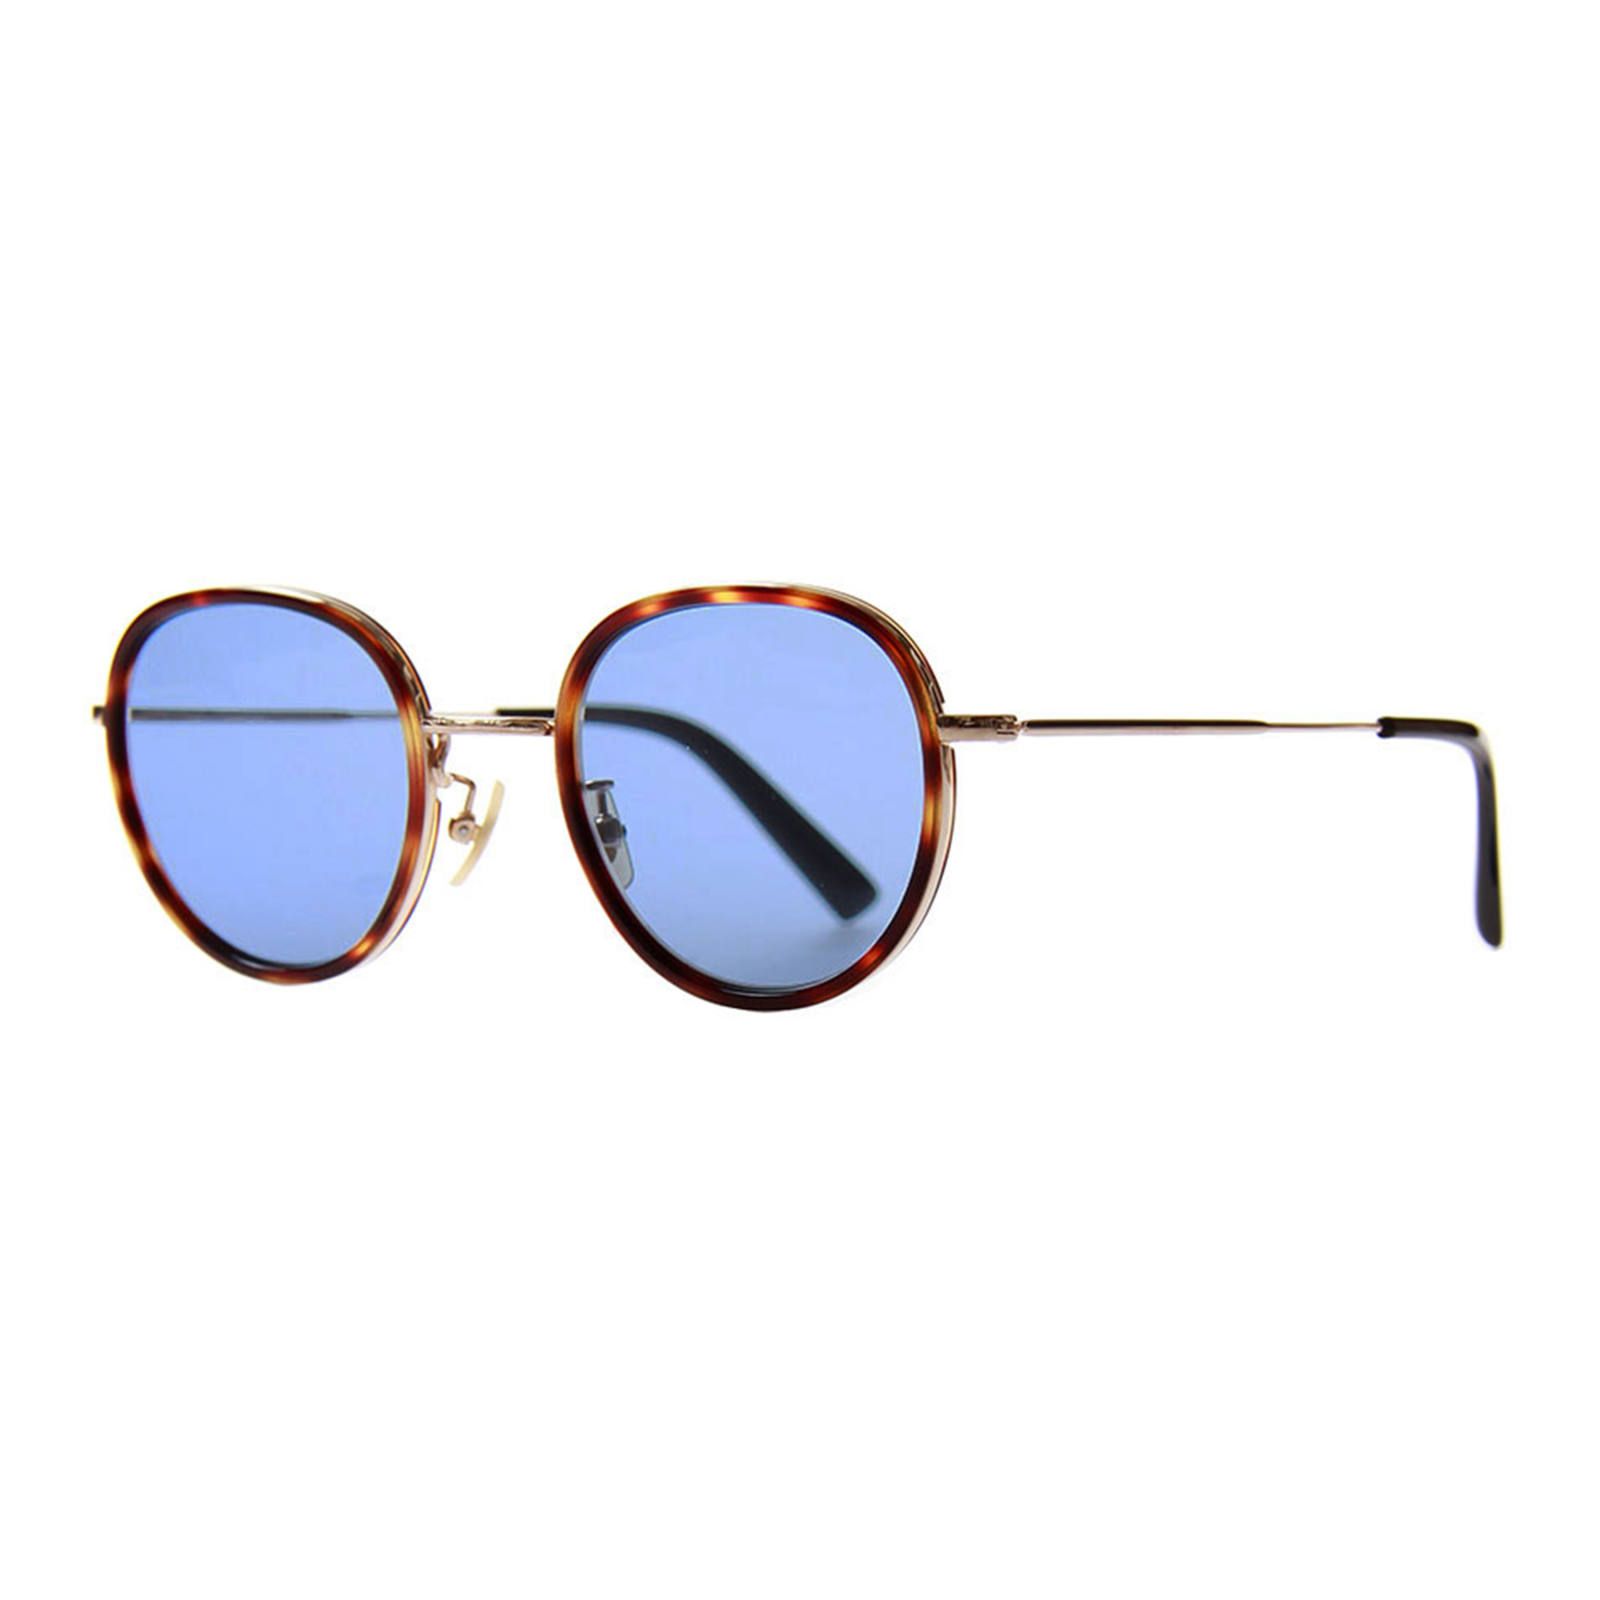 Martin/Gold/Havana (Sunglasses) - 45□23 145 (Small)